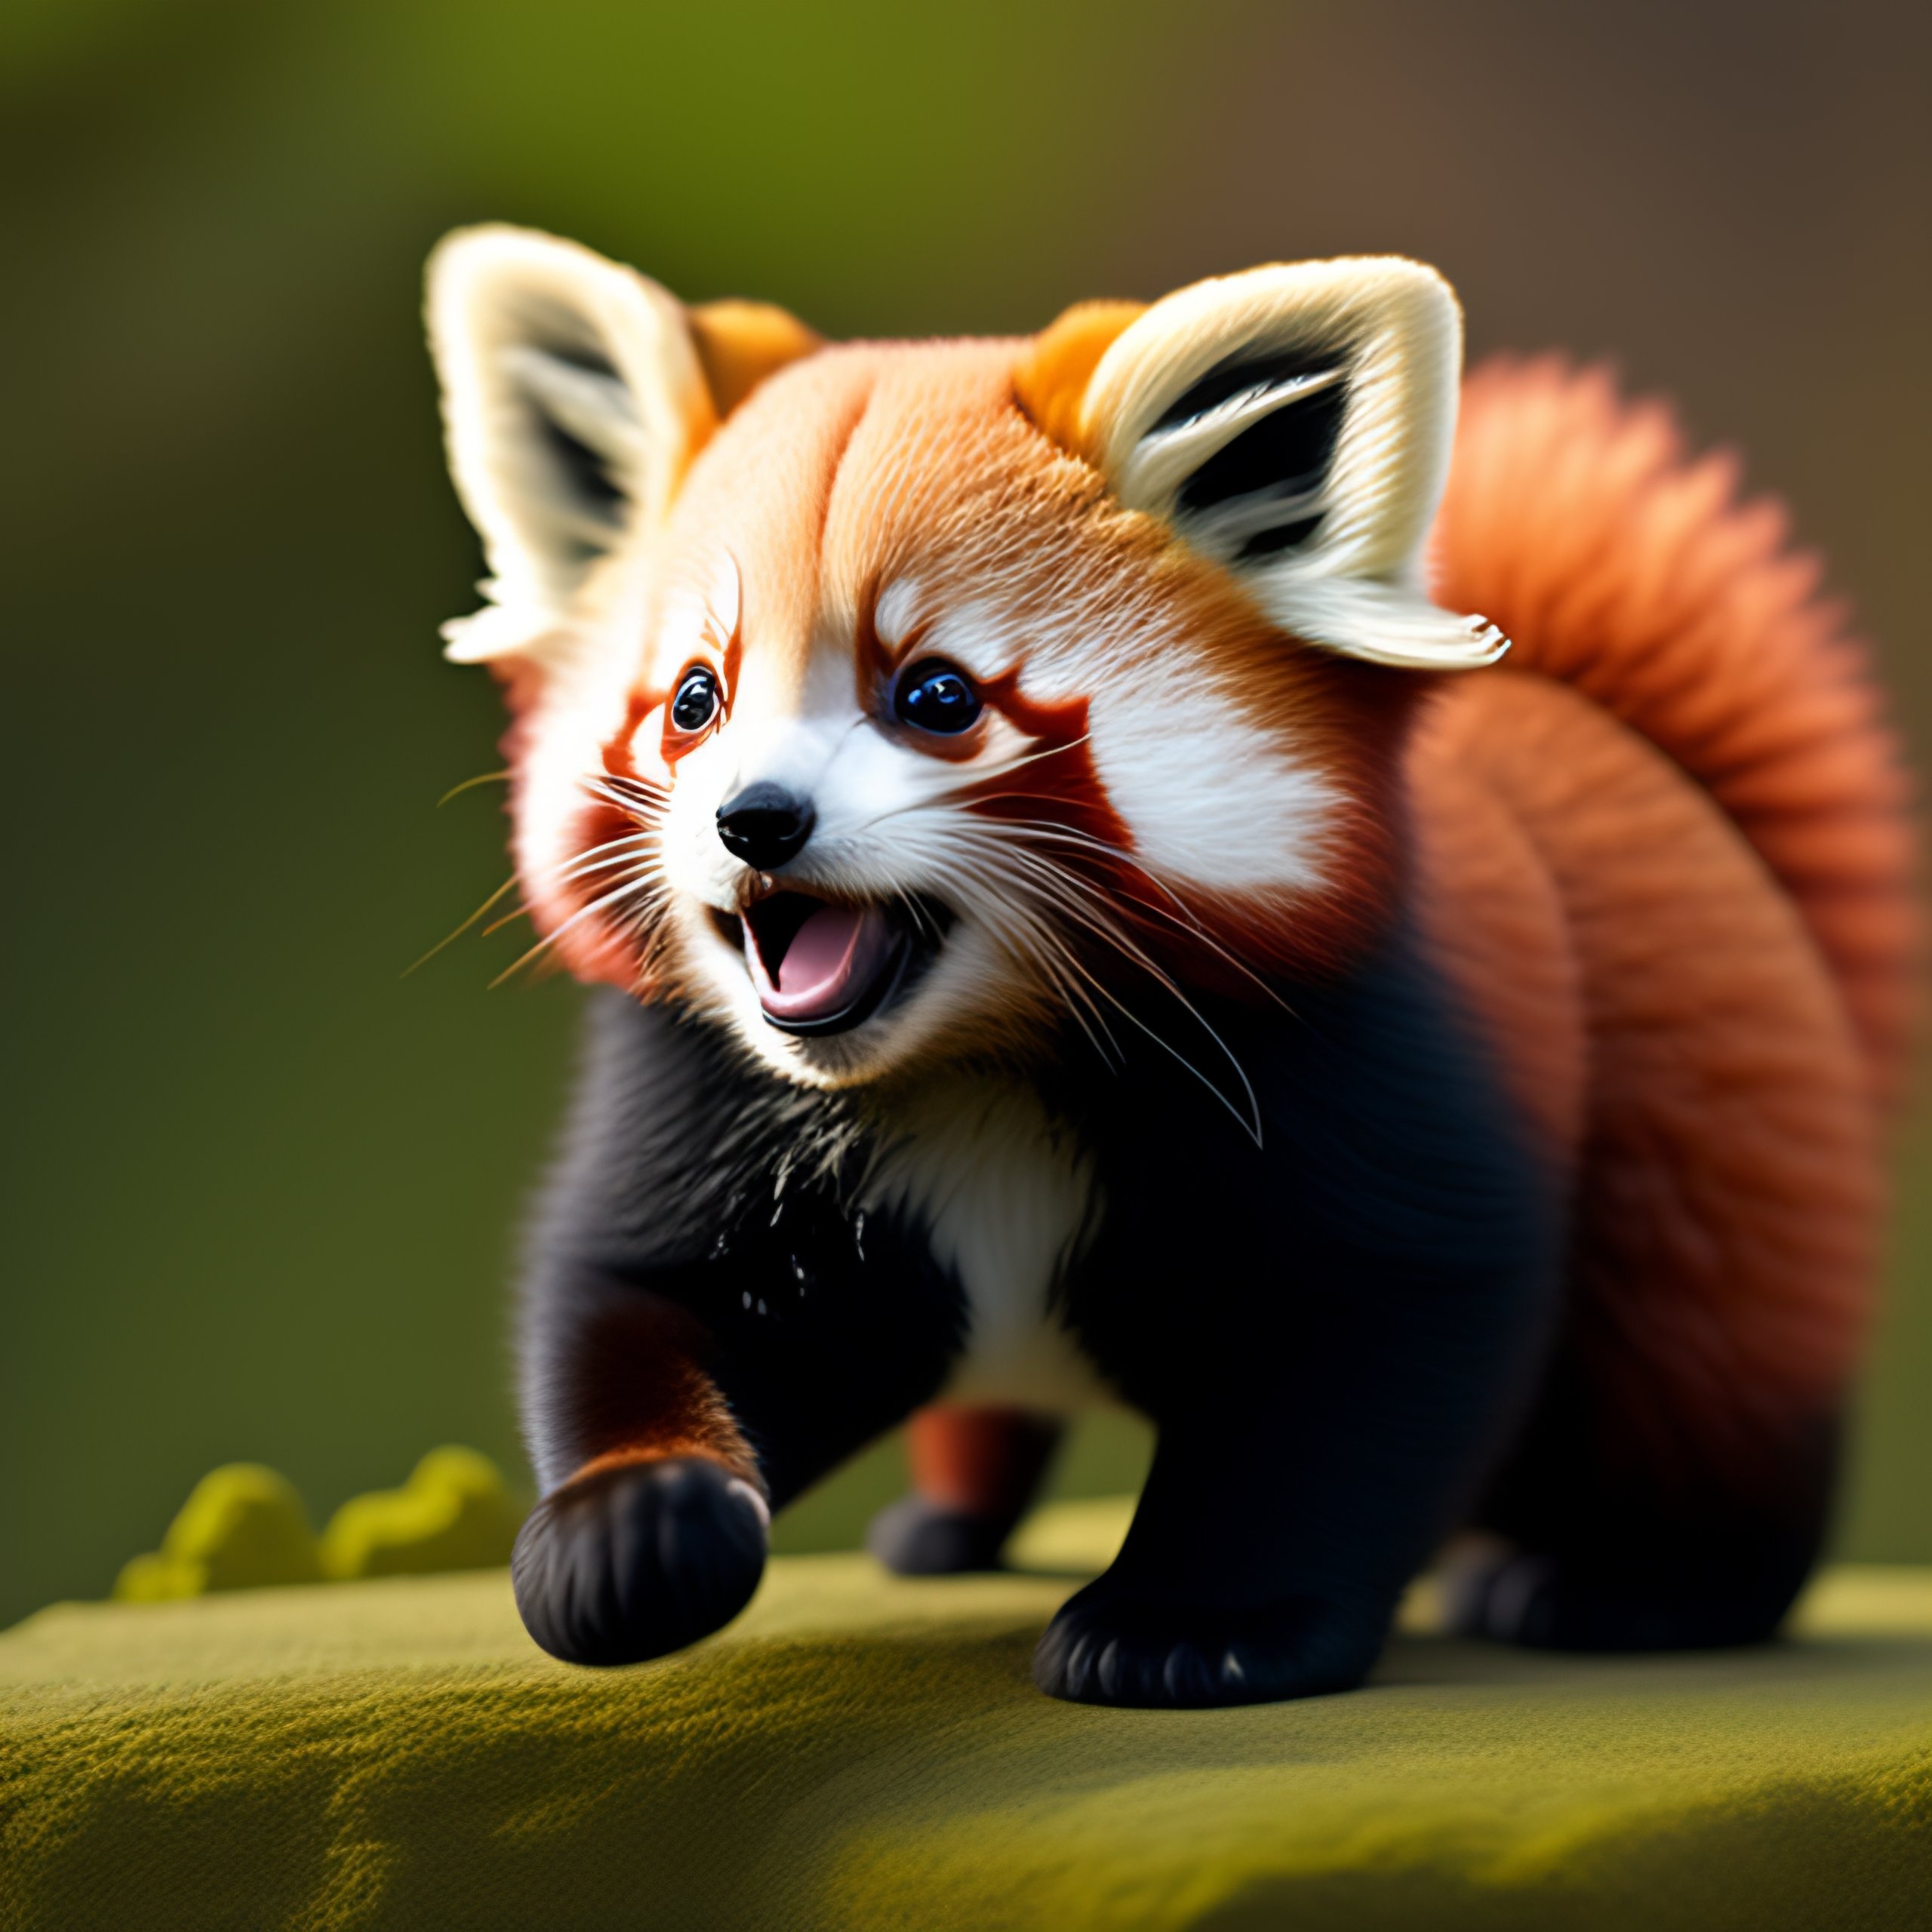 Lexica - Cute small humanoid red panda cat, yawning,